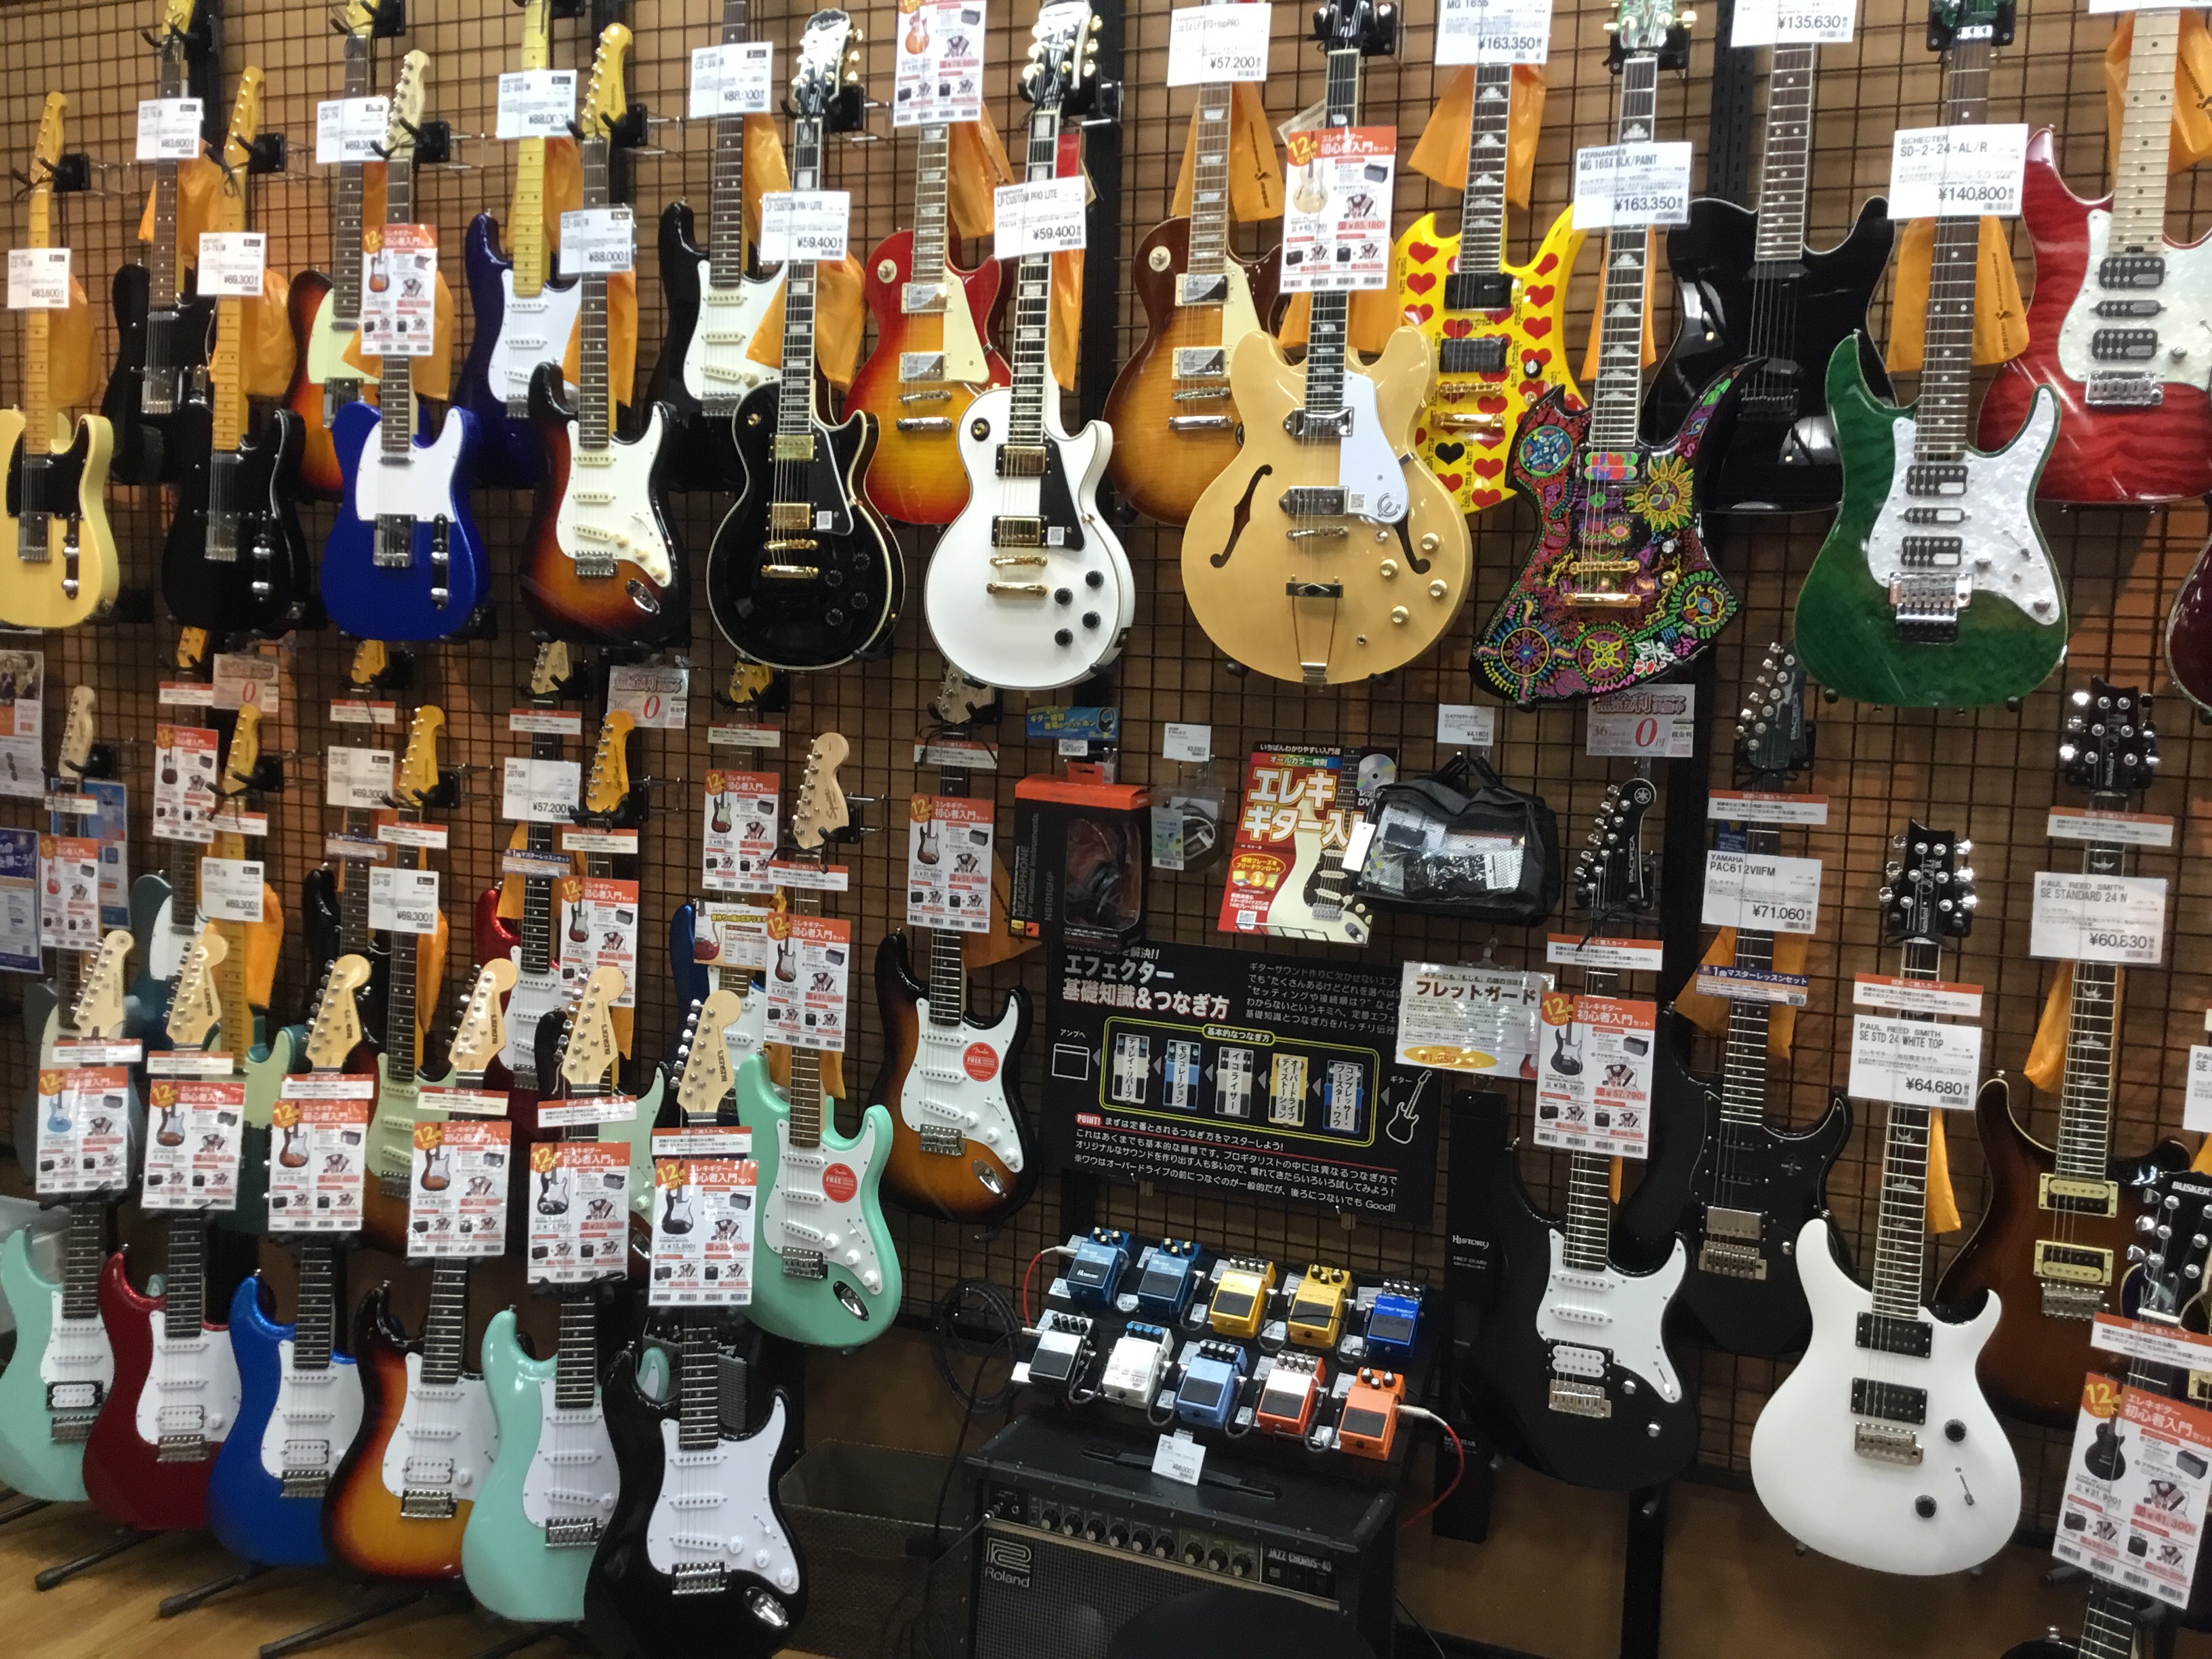 [https://www.shimamura.co.jp/shop/rifu/information/20200414/4625::title=] ]] こんにちは！利府店エレキギター担当の久米です！ 今回は数あるエレキギターの中から、これからエレキを始めたいという方におすすめのギターをご紹介します […]